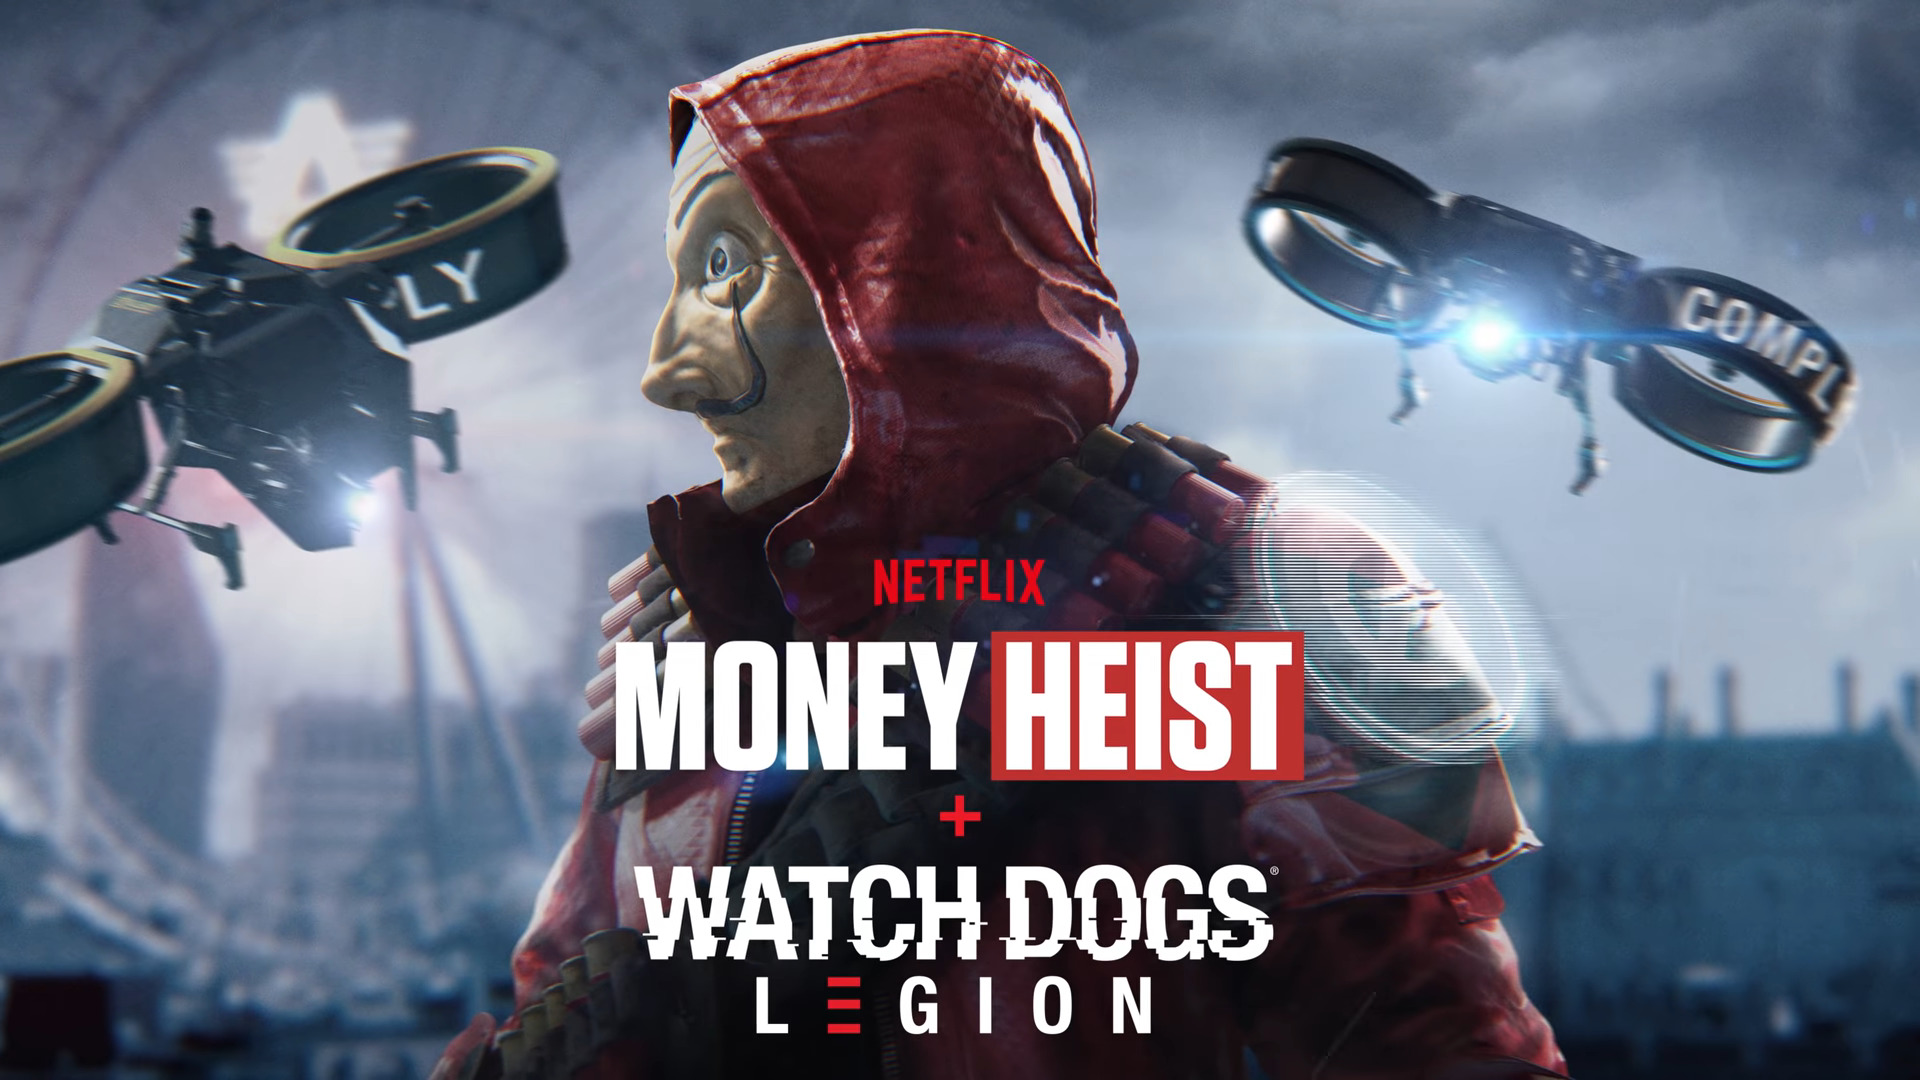 Watch Dogs: Legion จัดอีเวนต์ครอสโอเวอร์กับซีรีส์ Money Heist